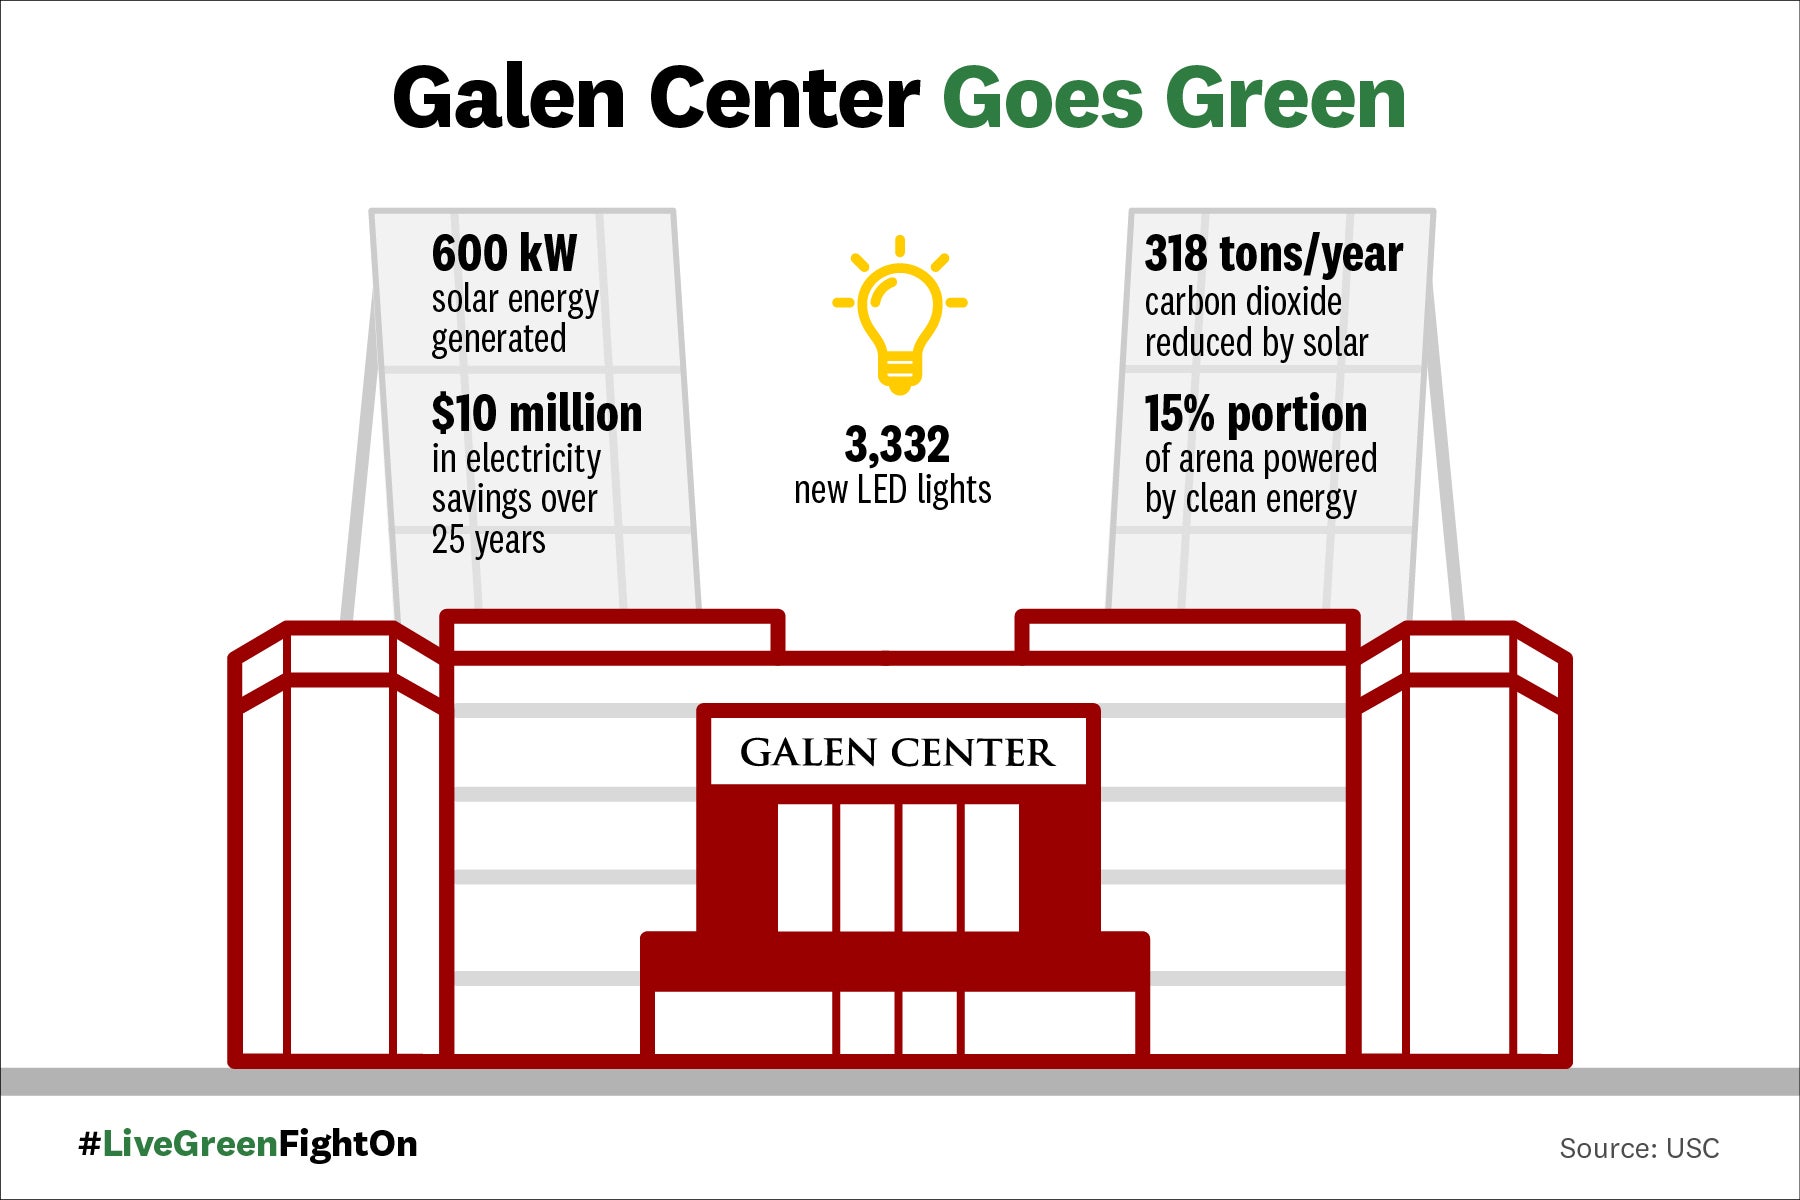 Galen Center Goes Green graphic